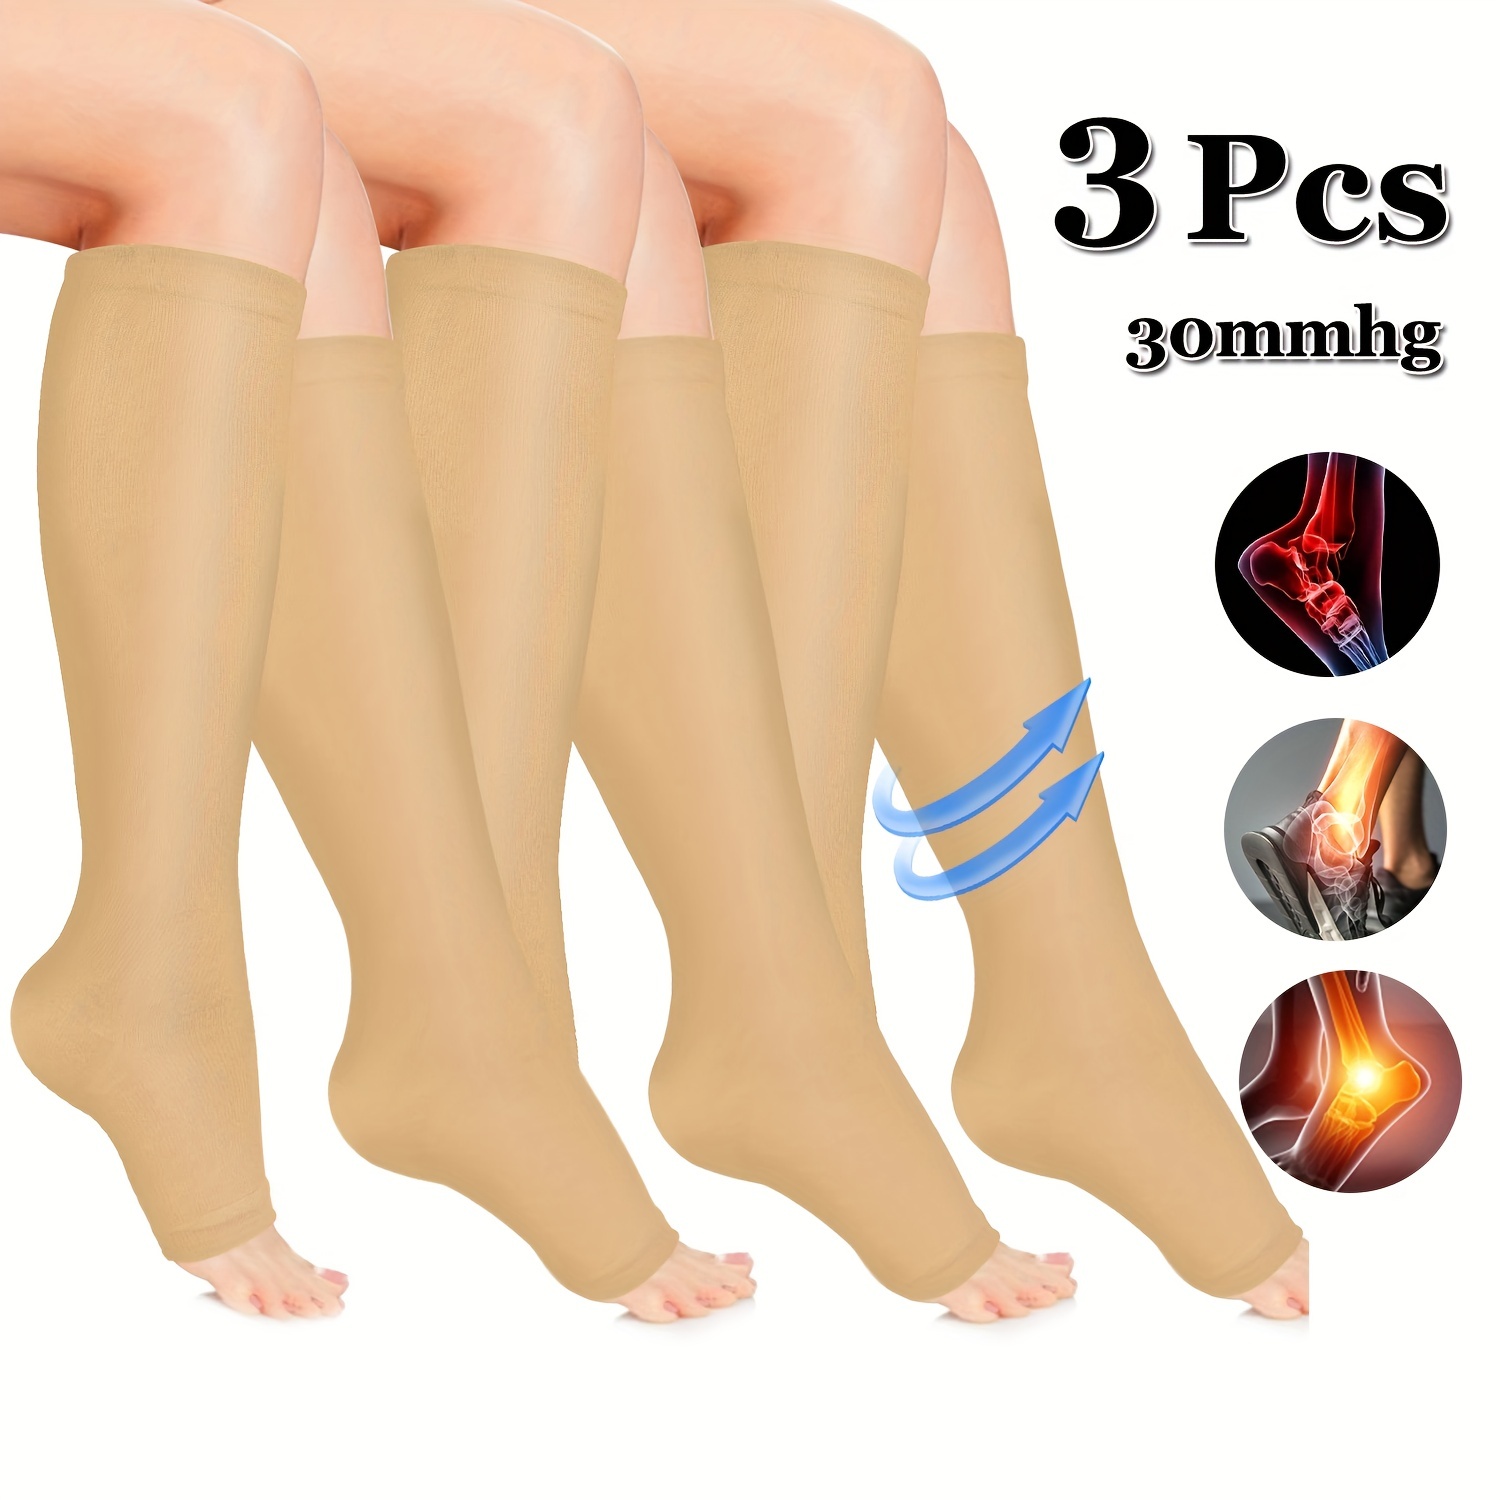 Open Toe Medical Compression Socks for Women & Men L/XL (1 Pair) - Beige